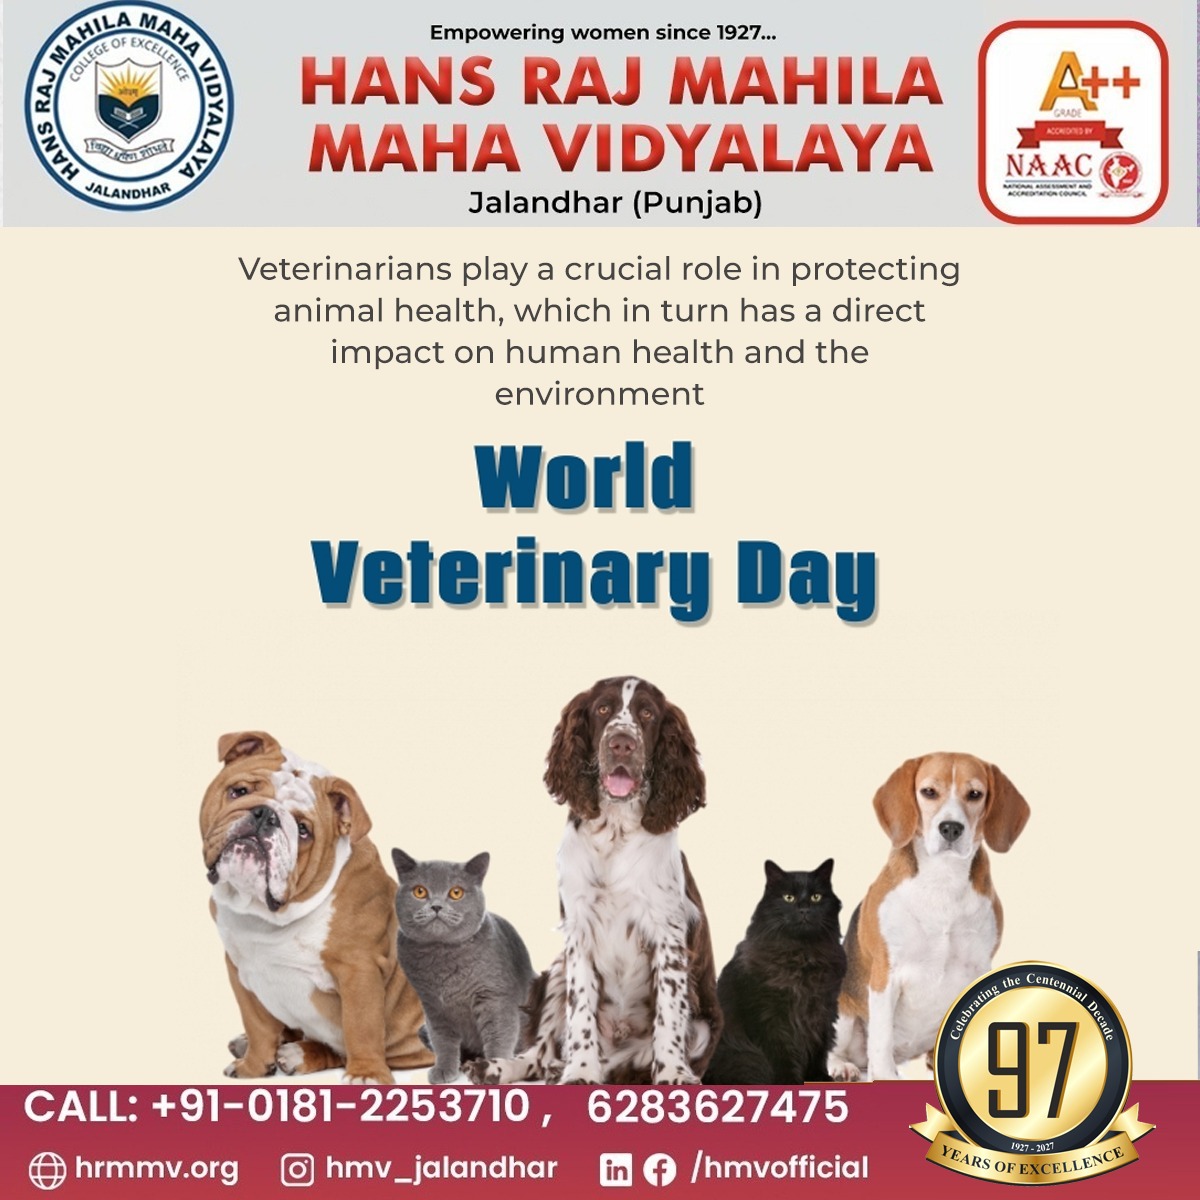 Happy World Veterinary Day! Let us celebrate the remarkable work of veterinary professionals.
#VeterinaryProfessionals #AnimalWelfare #WorldVeterinaryDay #hmv #hmvjalandhar #HansRajMahilaMahaVidyalaya #womenscollegepunjab